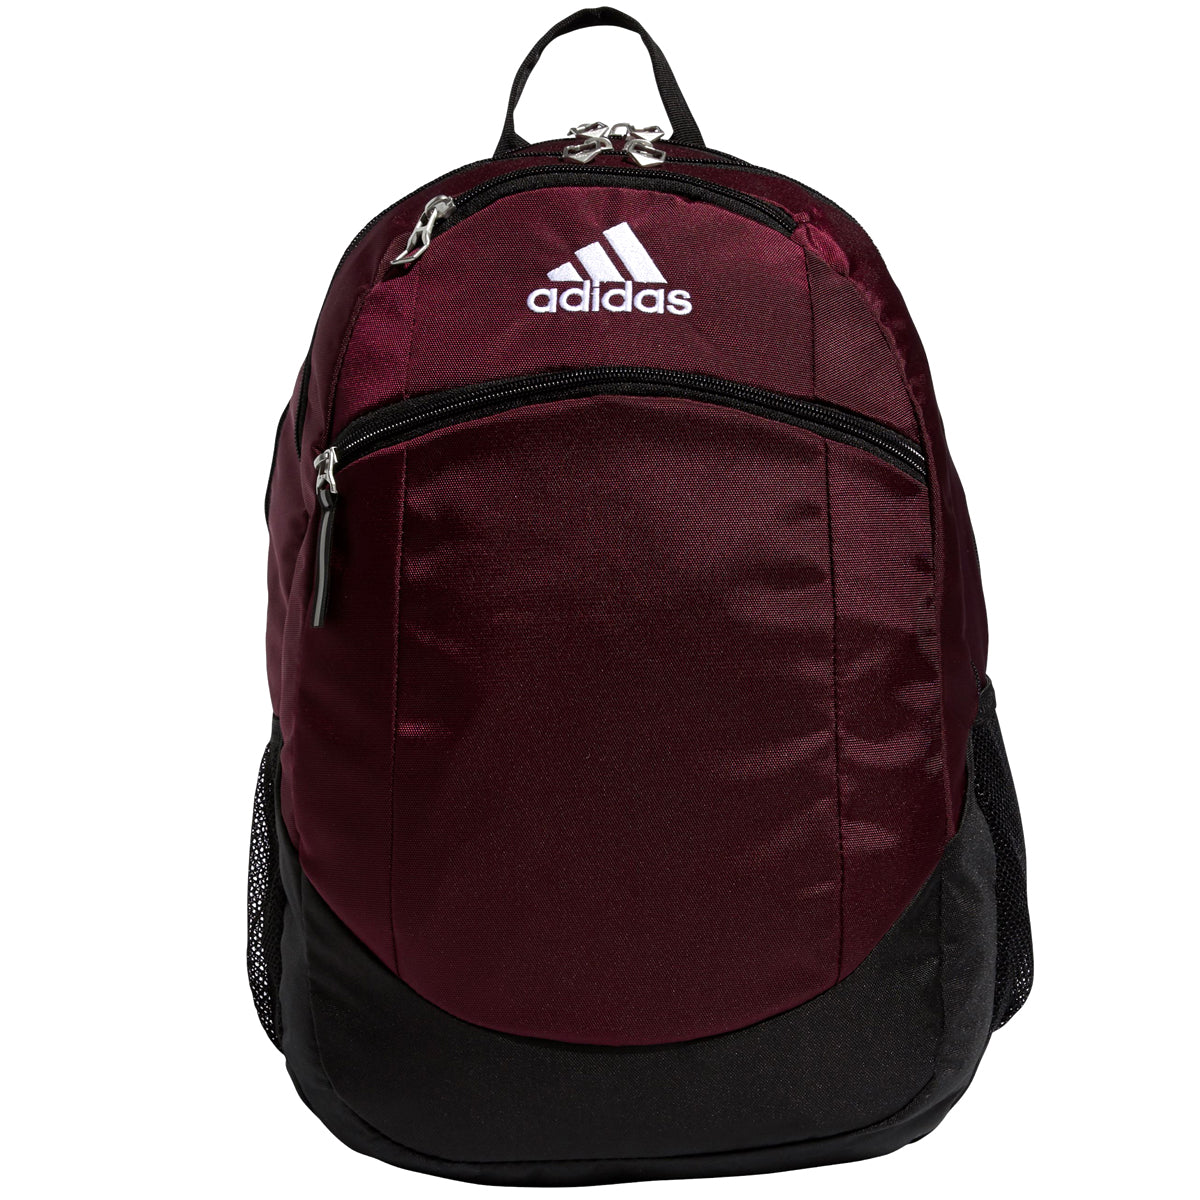 adidas Striker II Team Backpack Bags Adidas One Size Maroon/Black/White 